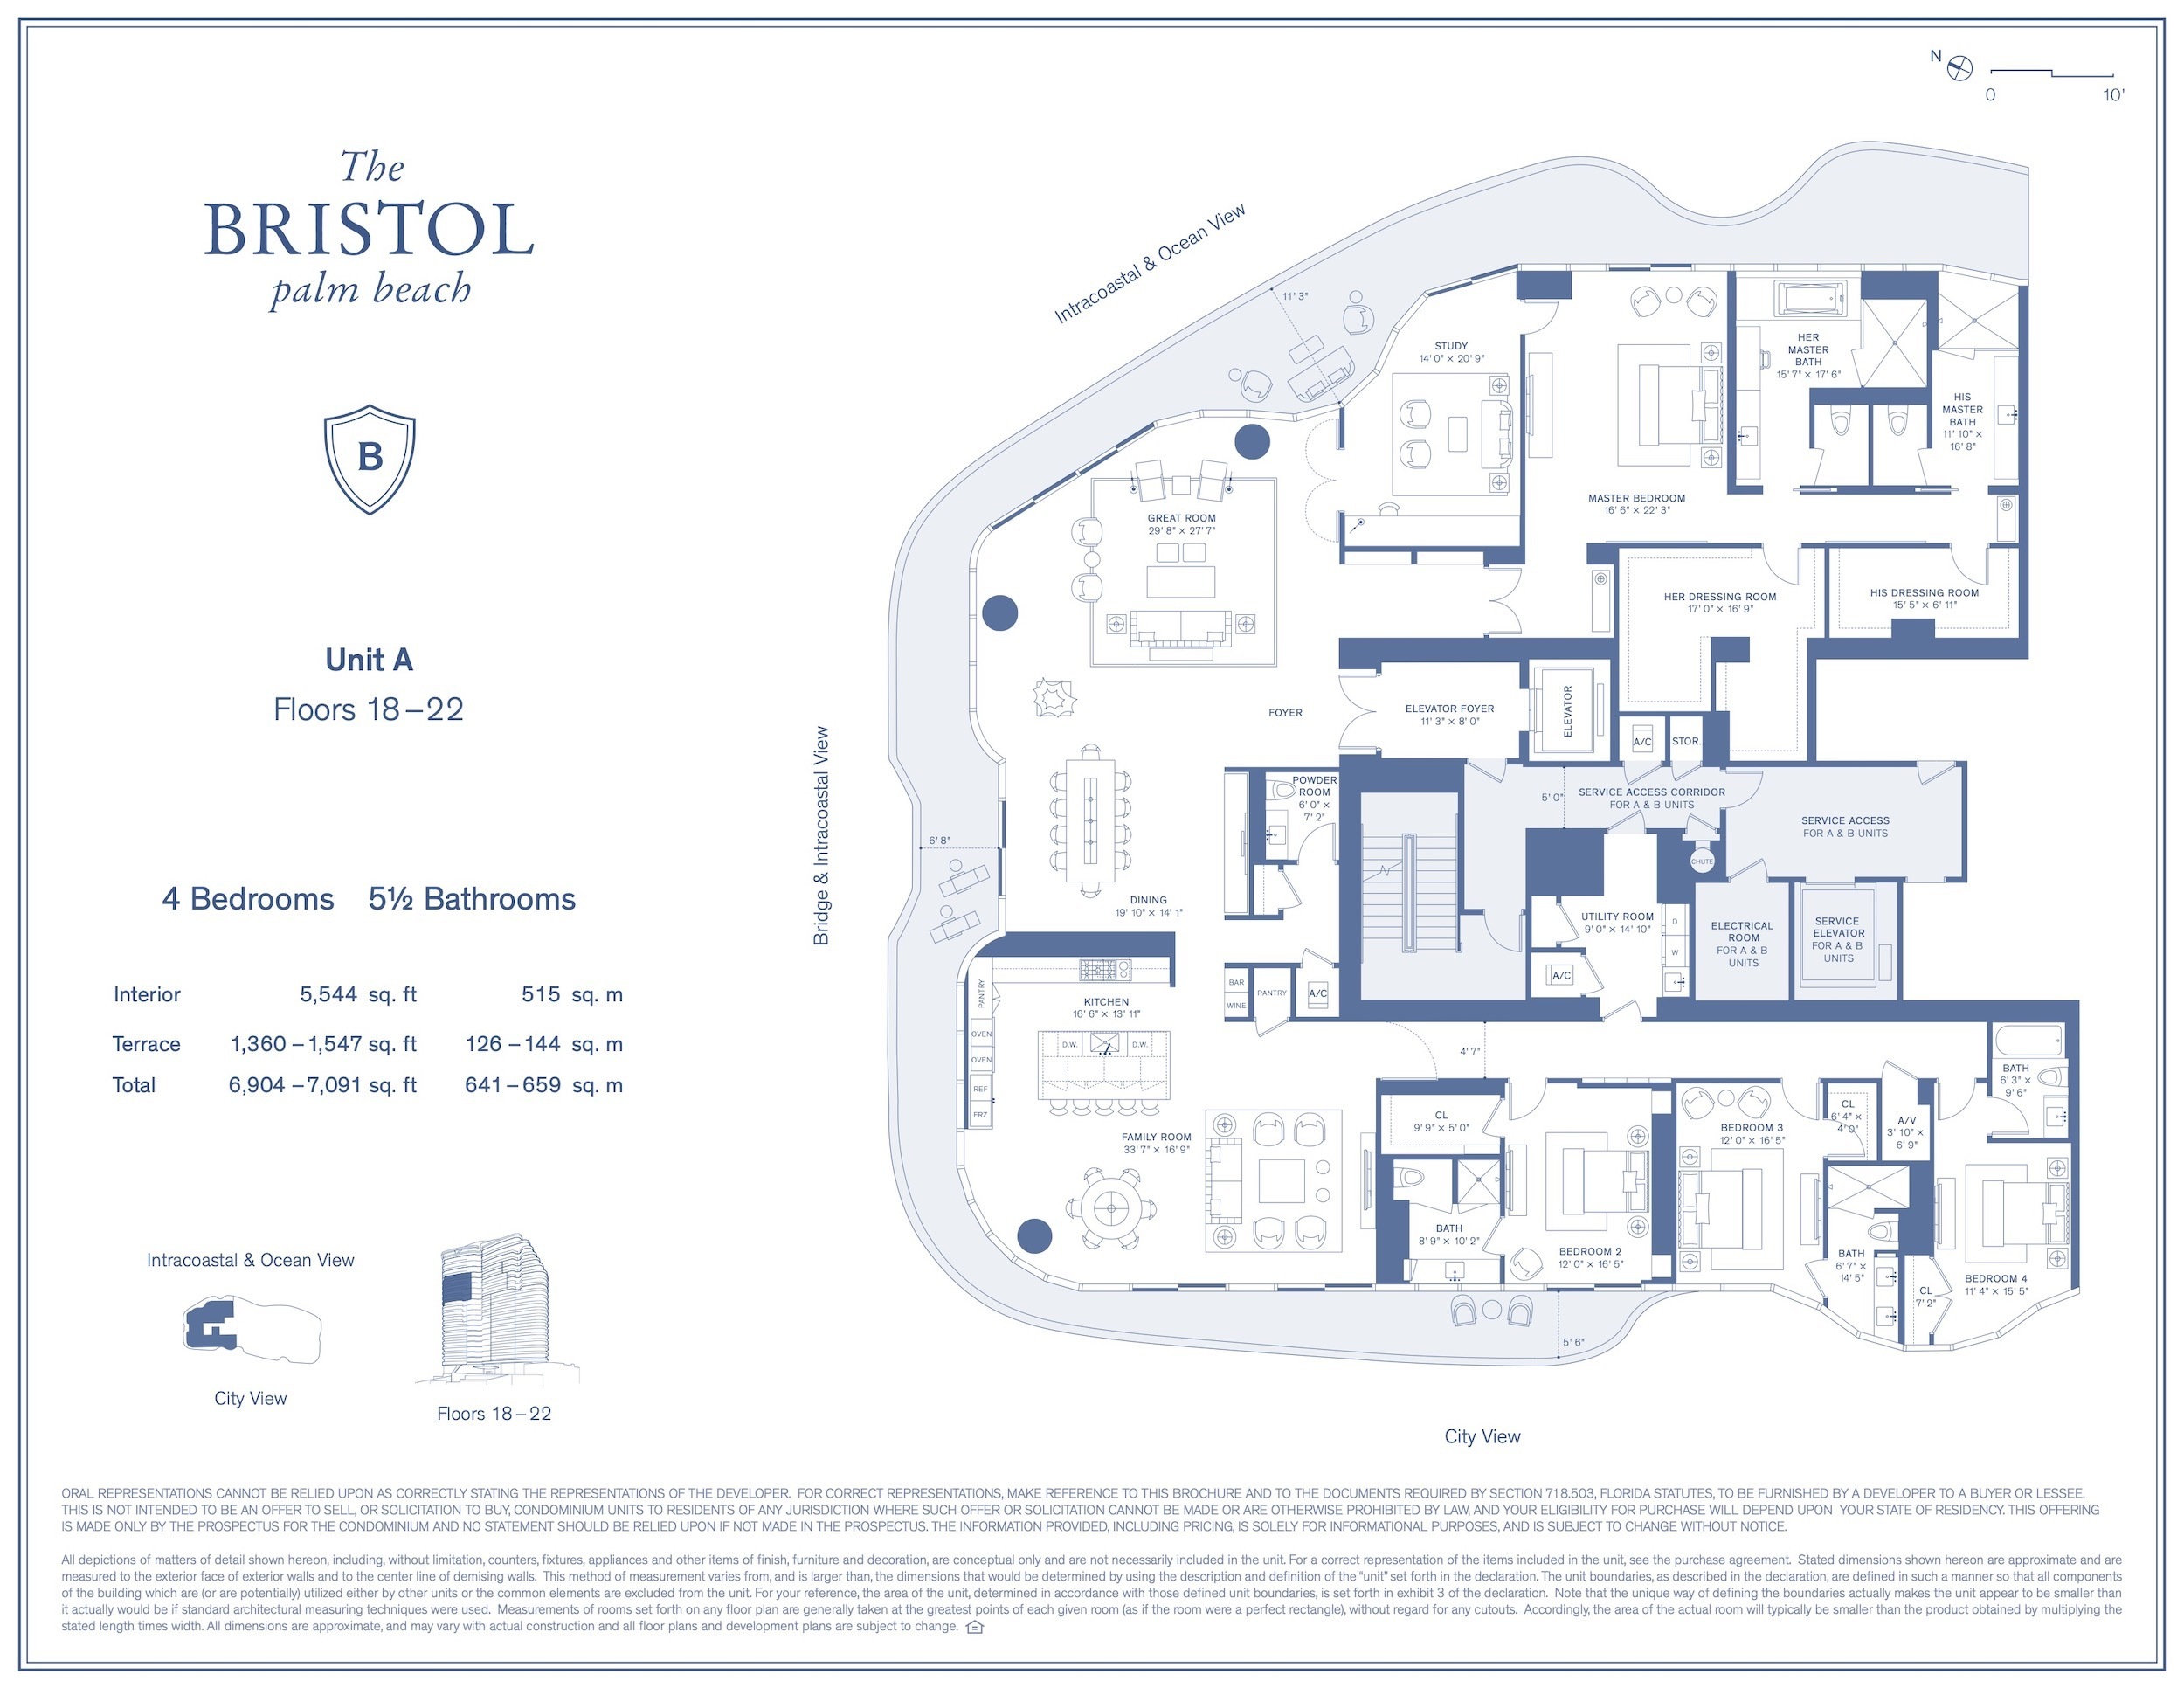 Floor Plan for The Bristol Palm Beach Floorplans, A Floors 18-22